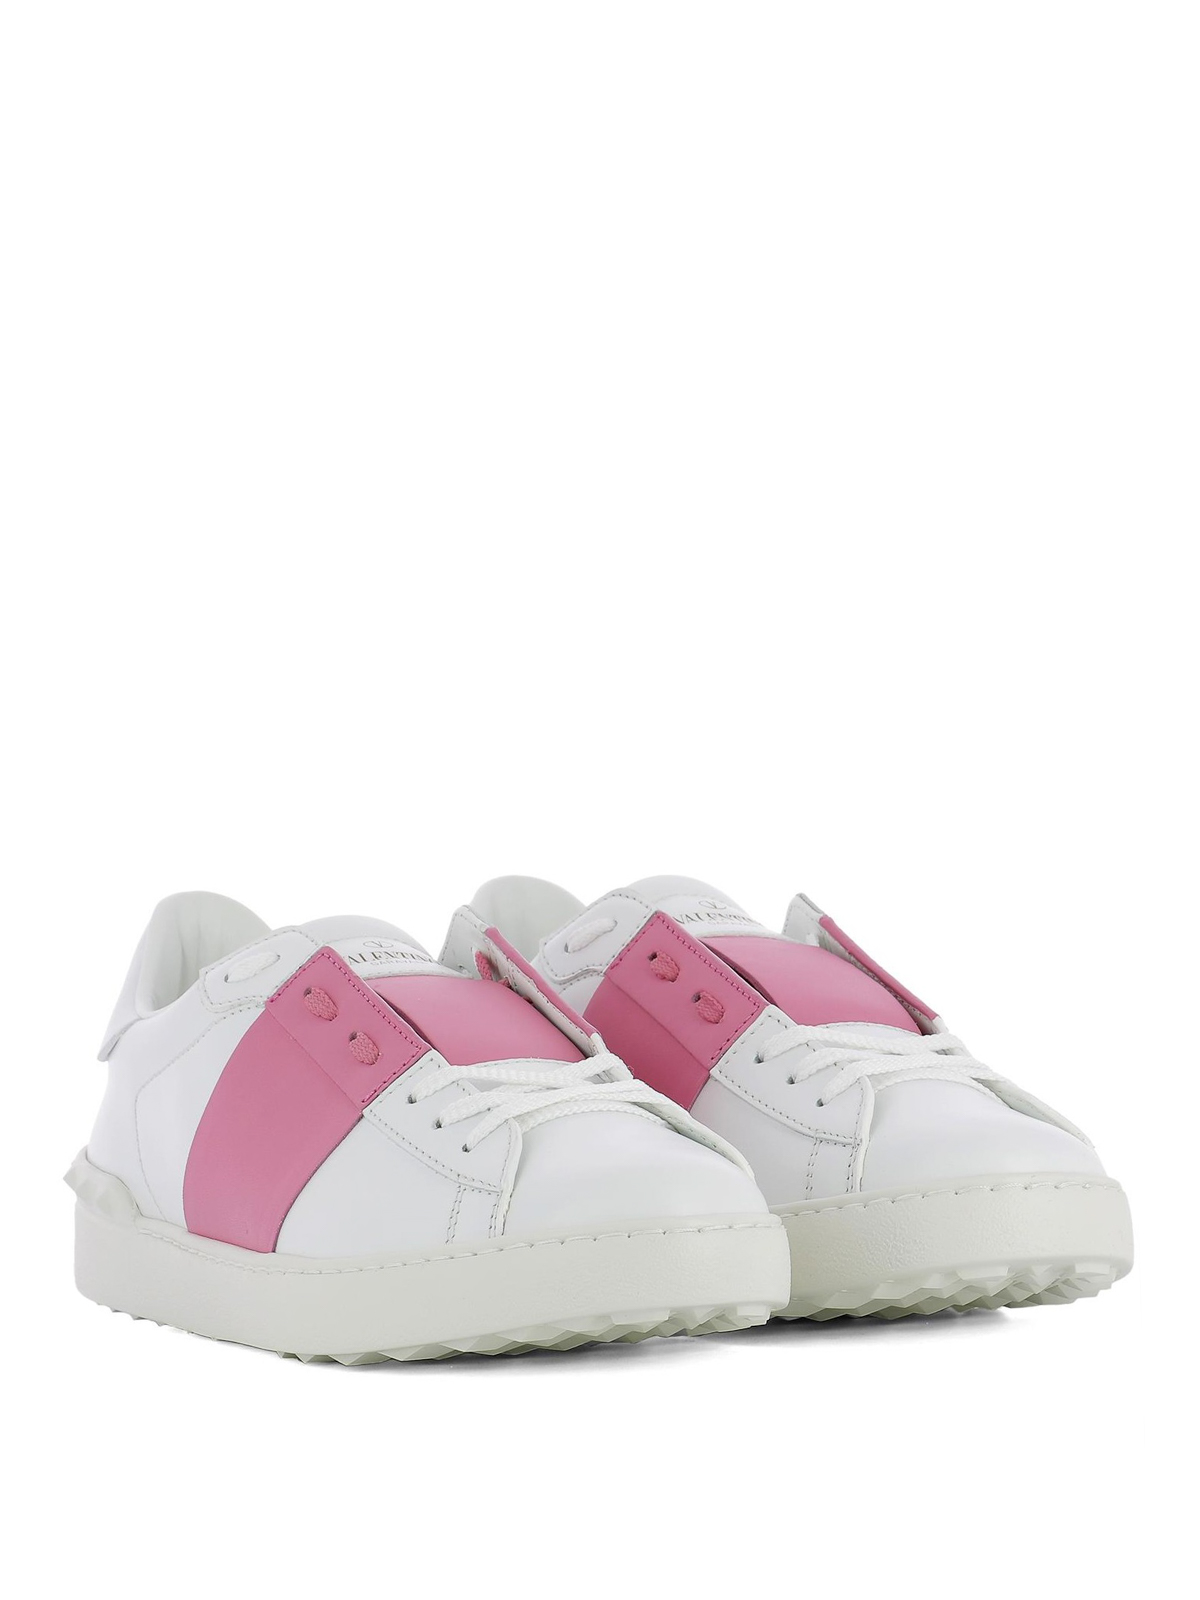 Valentino Garavani - pink band leather sneakers - PY2S0830BLUN76